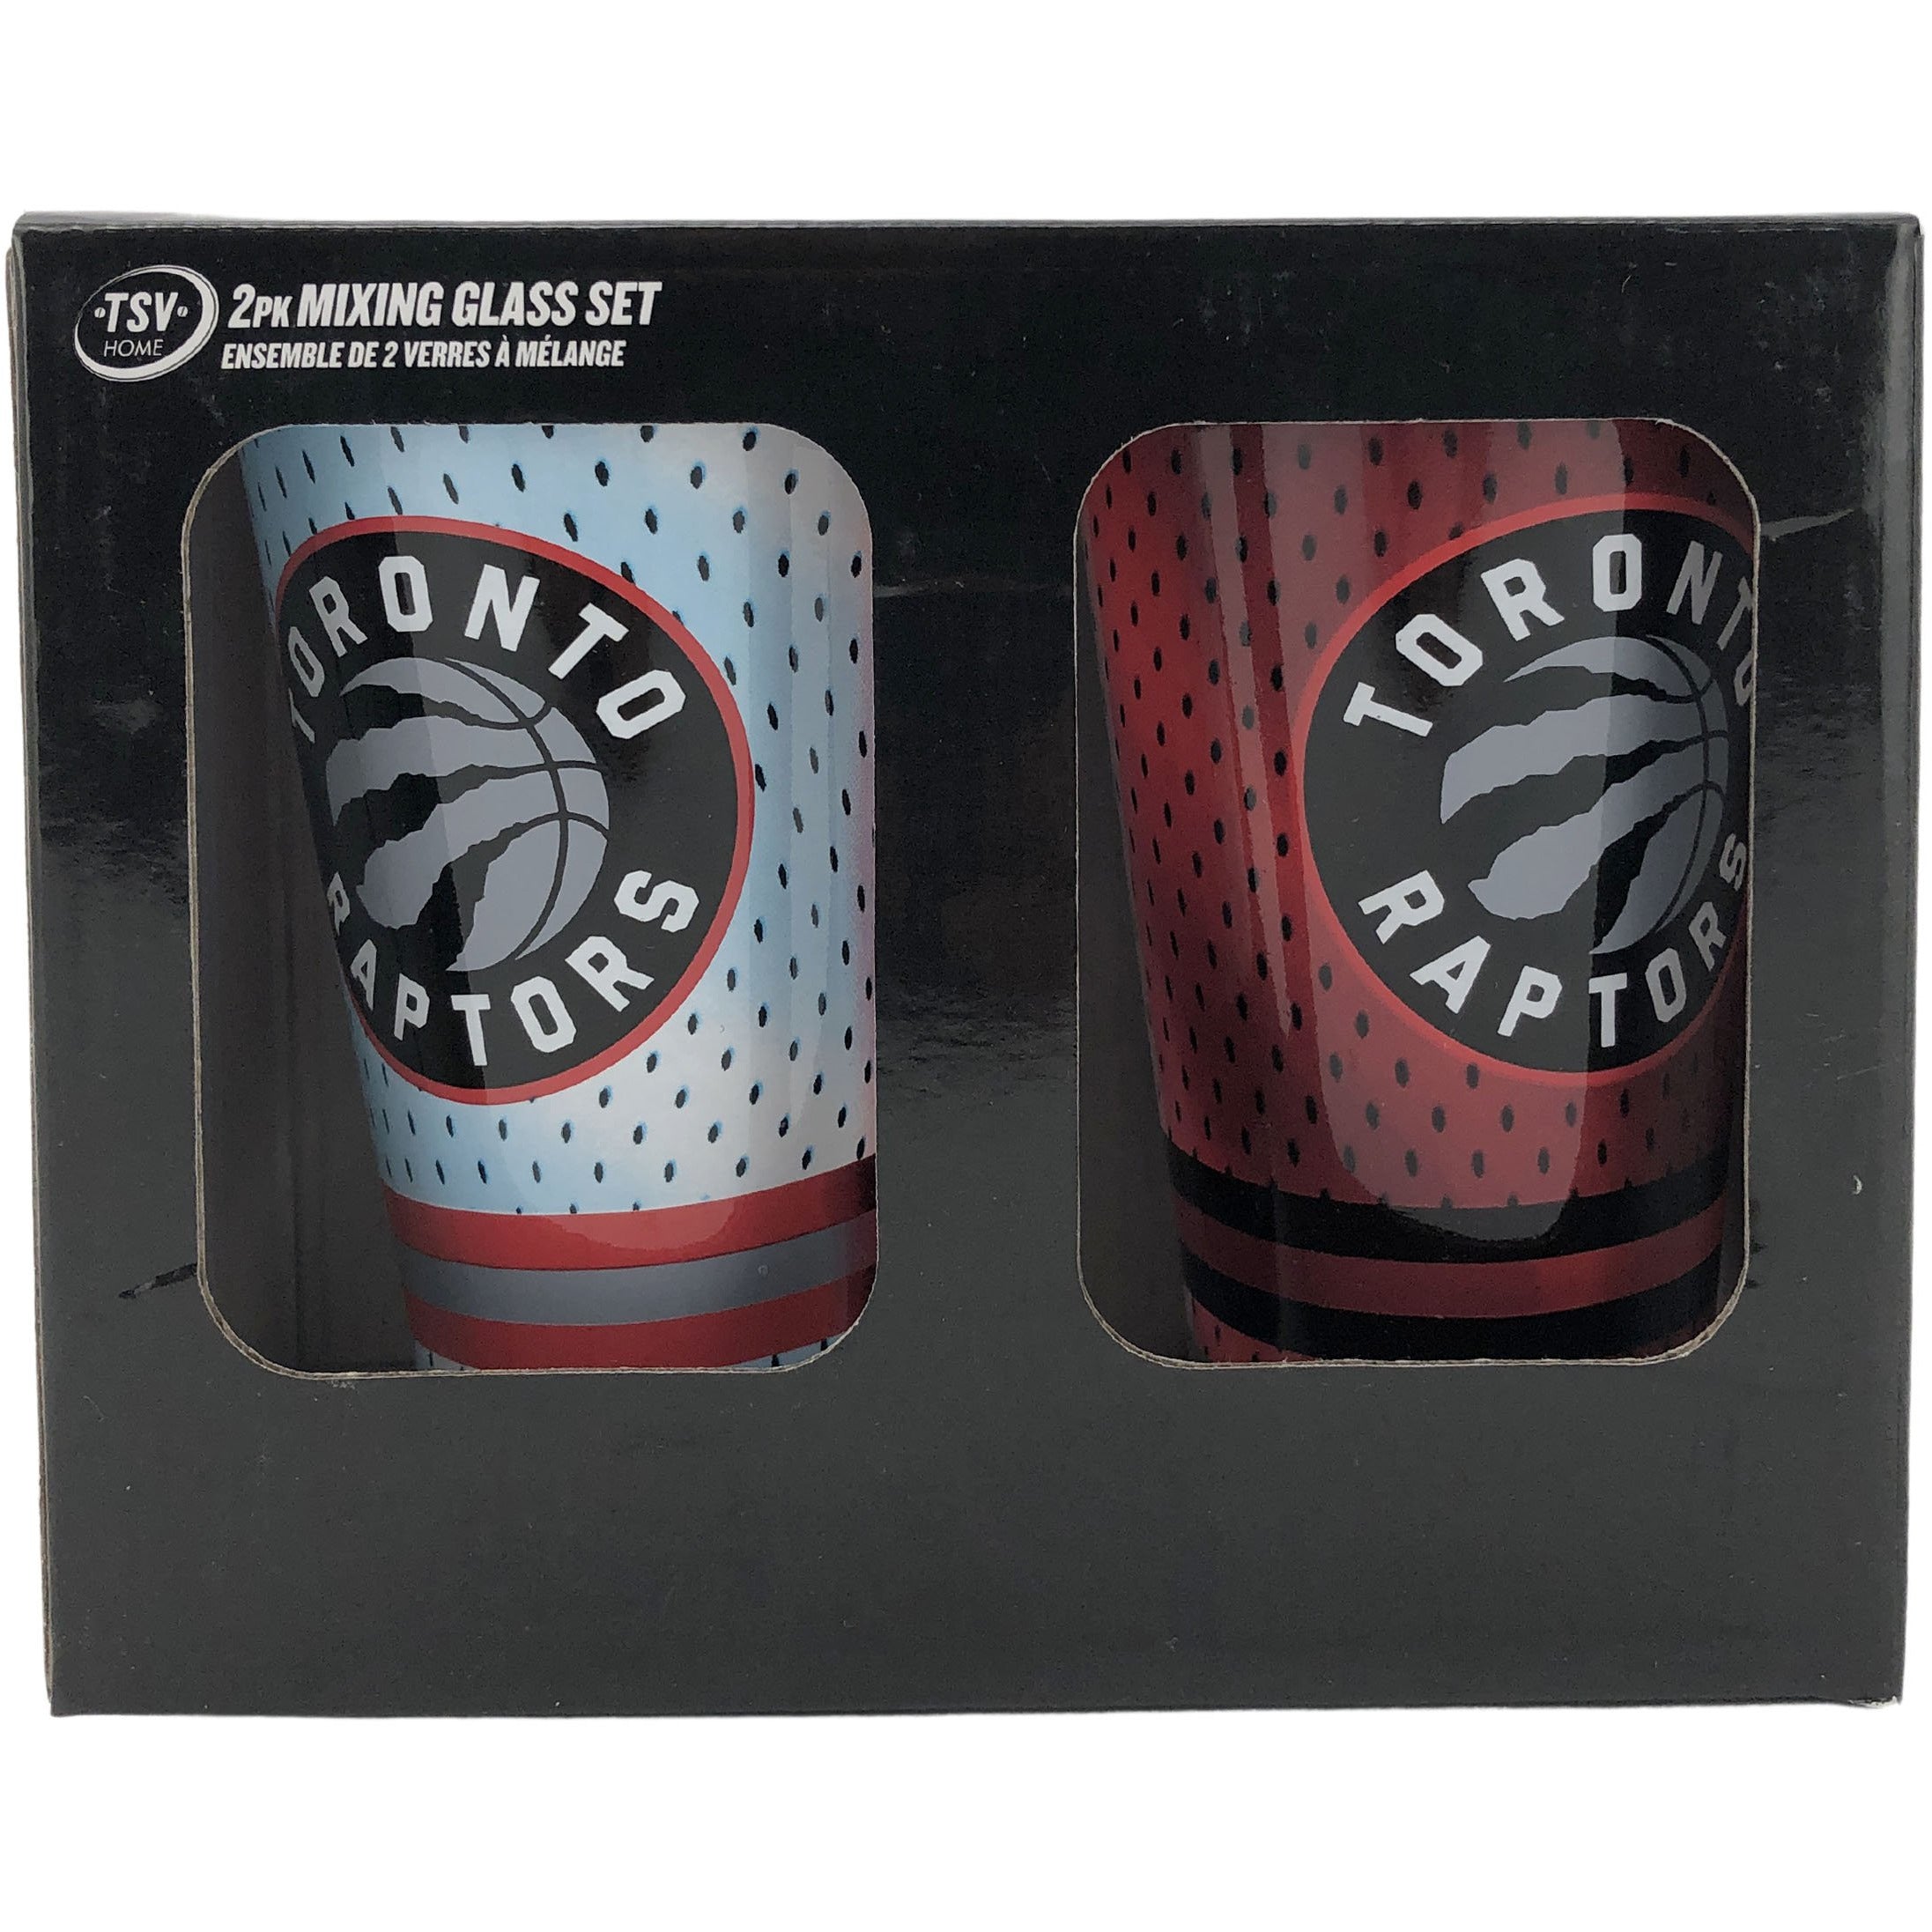 Toronto Raptors Matching Glass Tumbler Set in a 2 Pack